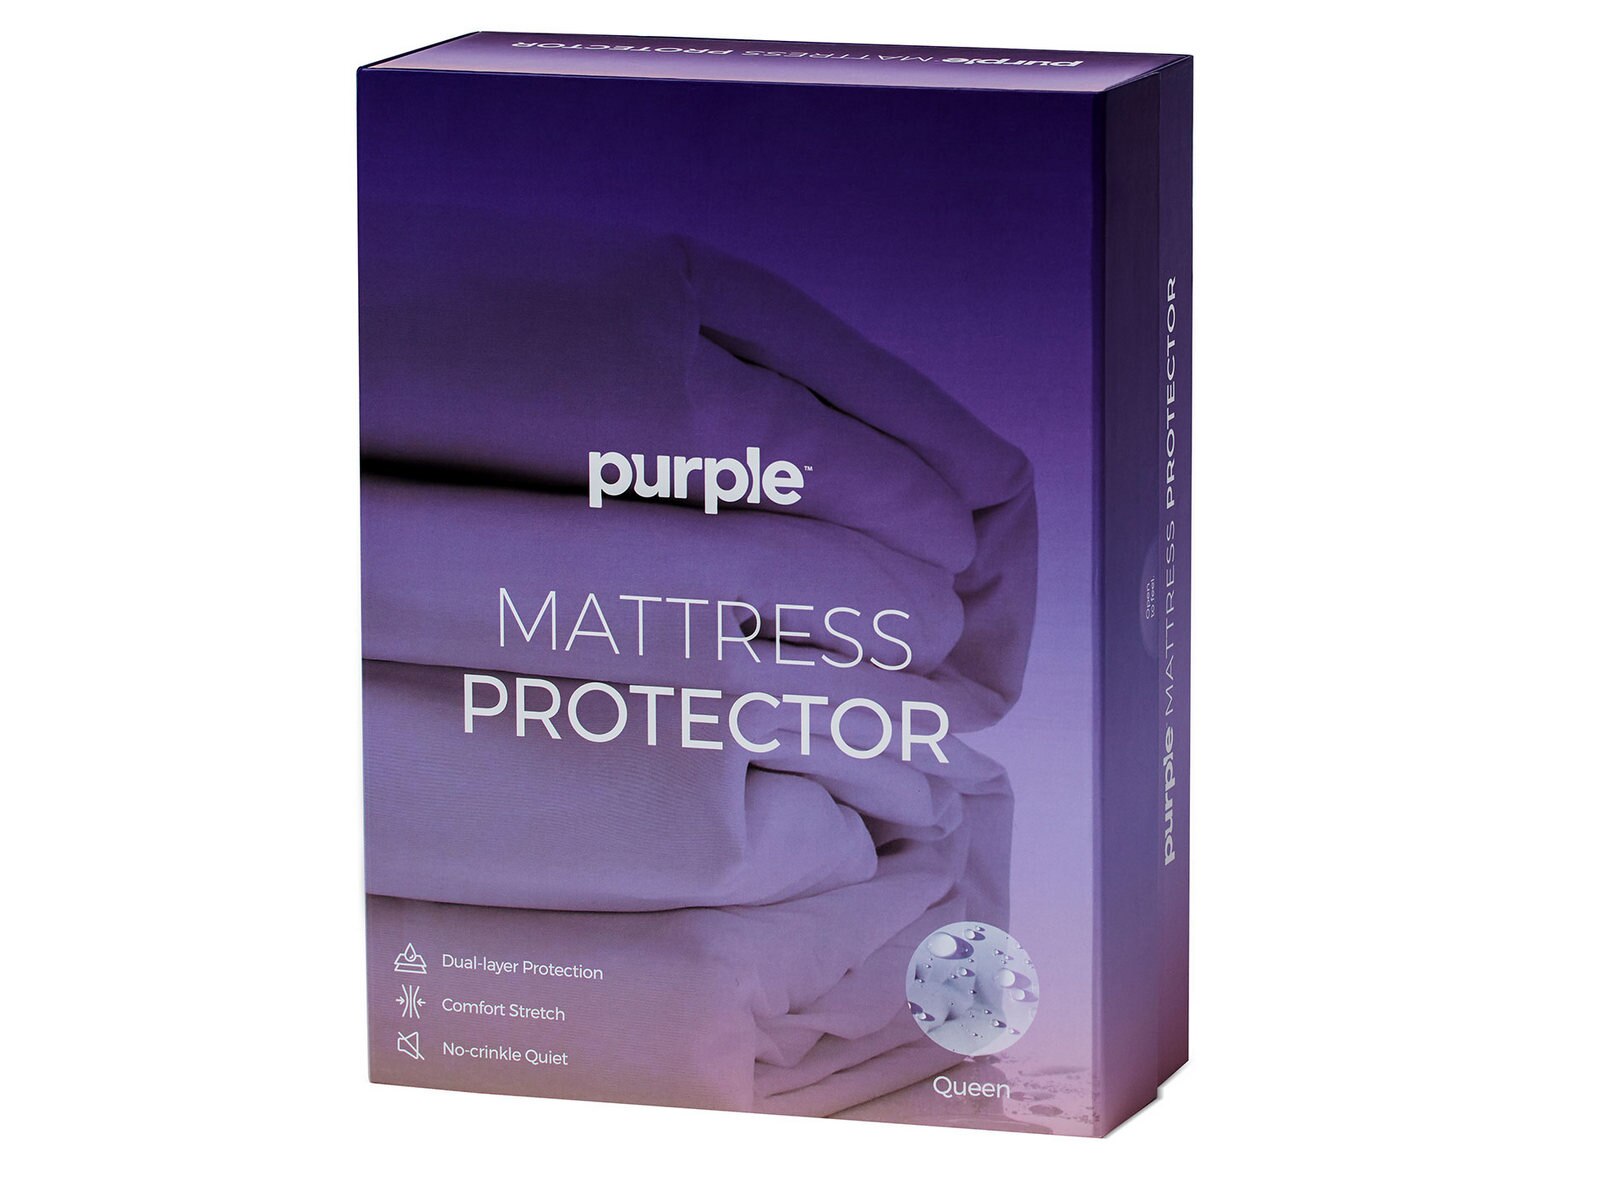 Deep Pocket Mattress Protector